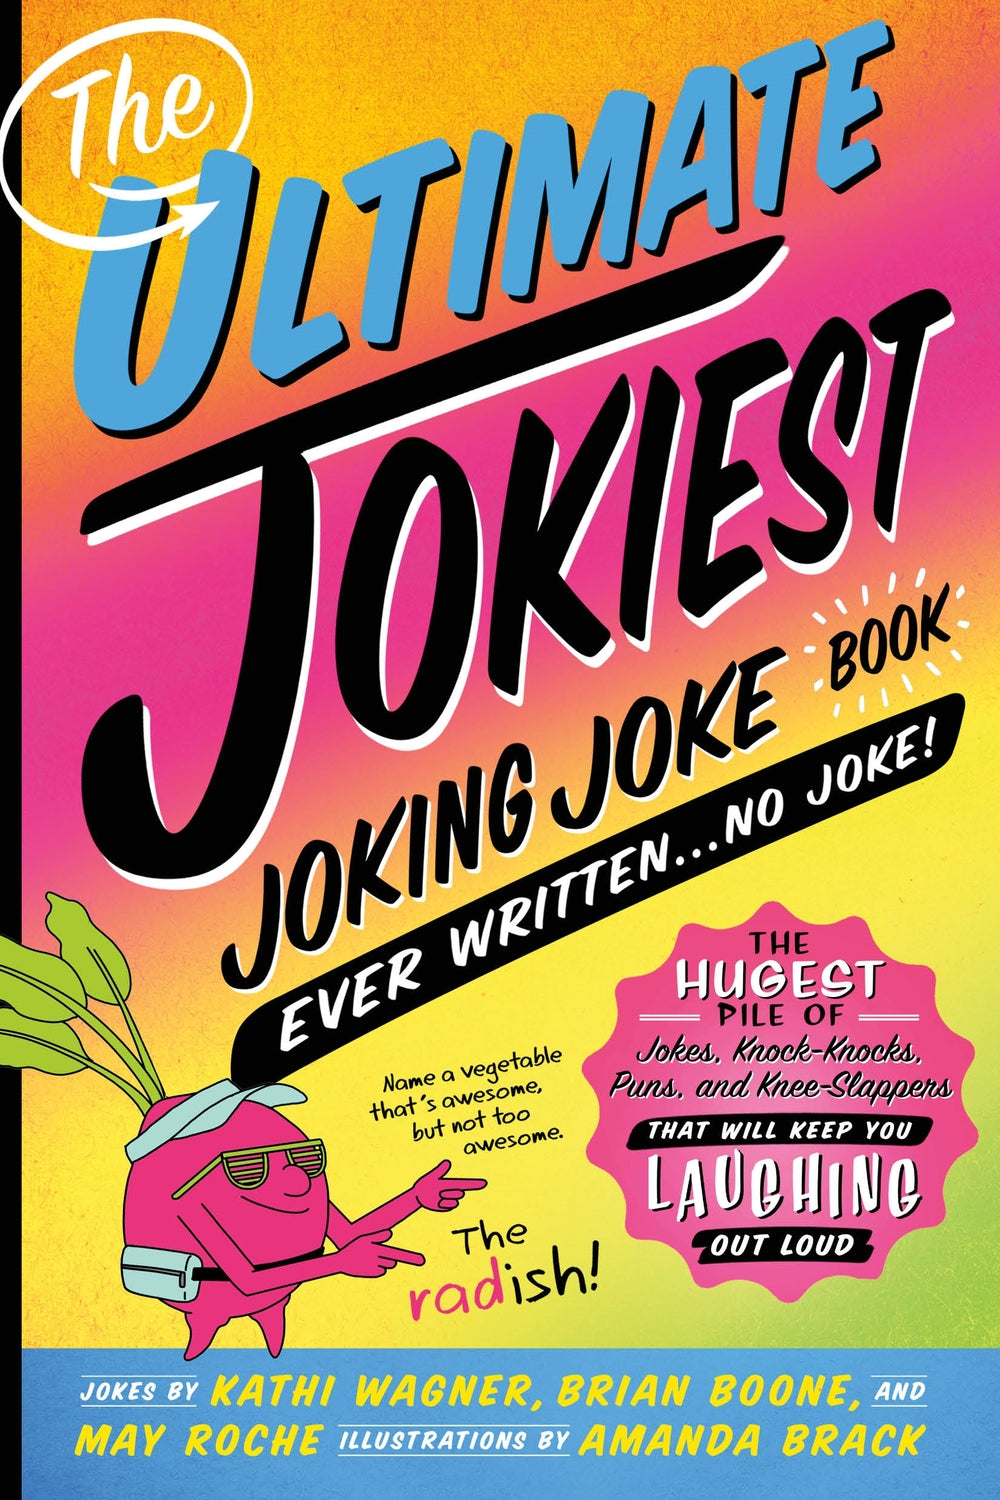 The Ultimate Jokiest Joking Joke Book Ever Written . . . No Joke!: The Hugest Pile of Jokes, Knock-Knocks, Puns, and Knee-Slappers That Will Keep You Laughing Out Loud